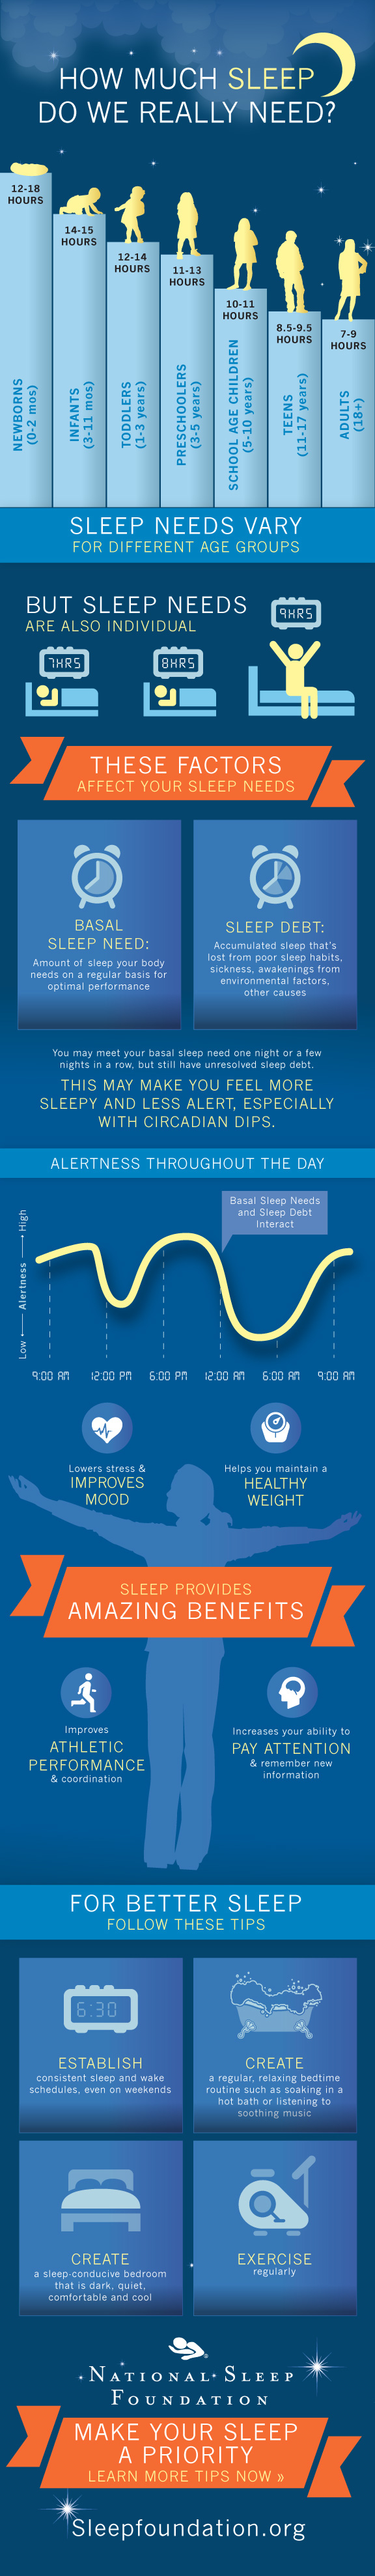 How Much Sleep Do We Really Need